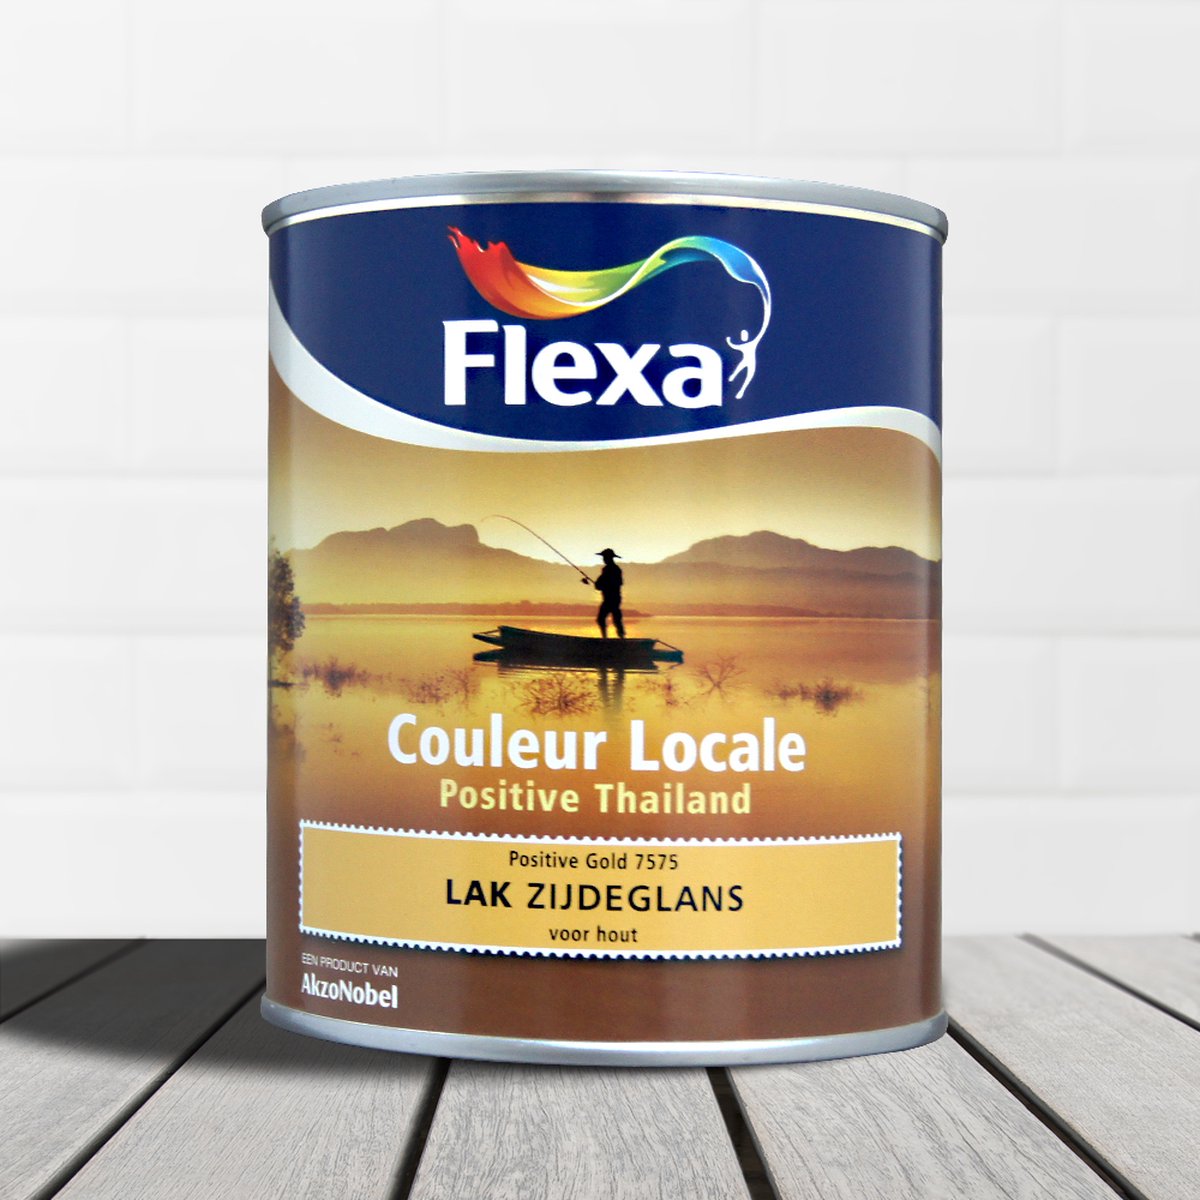 Flexa Couleur Locale - Lak Zijdeglans - Positive Thailand Gold - 7575 - 0,75 liter